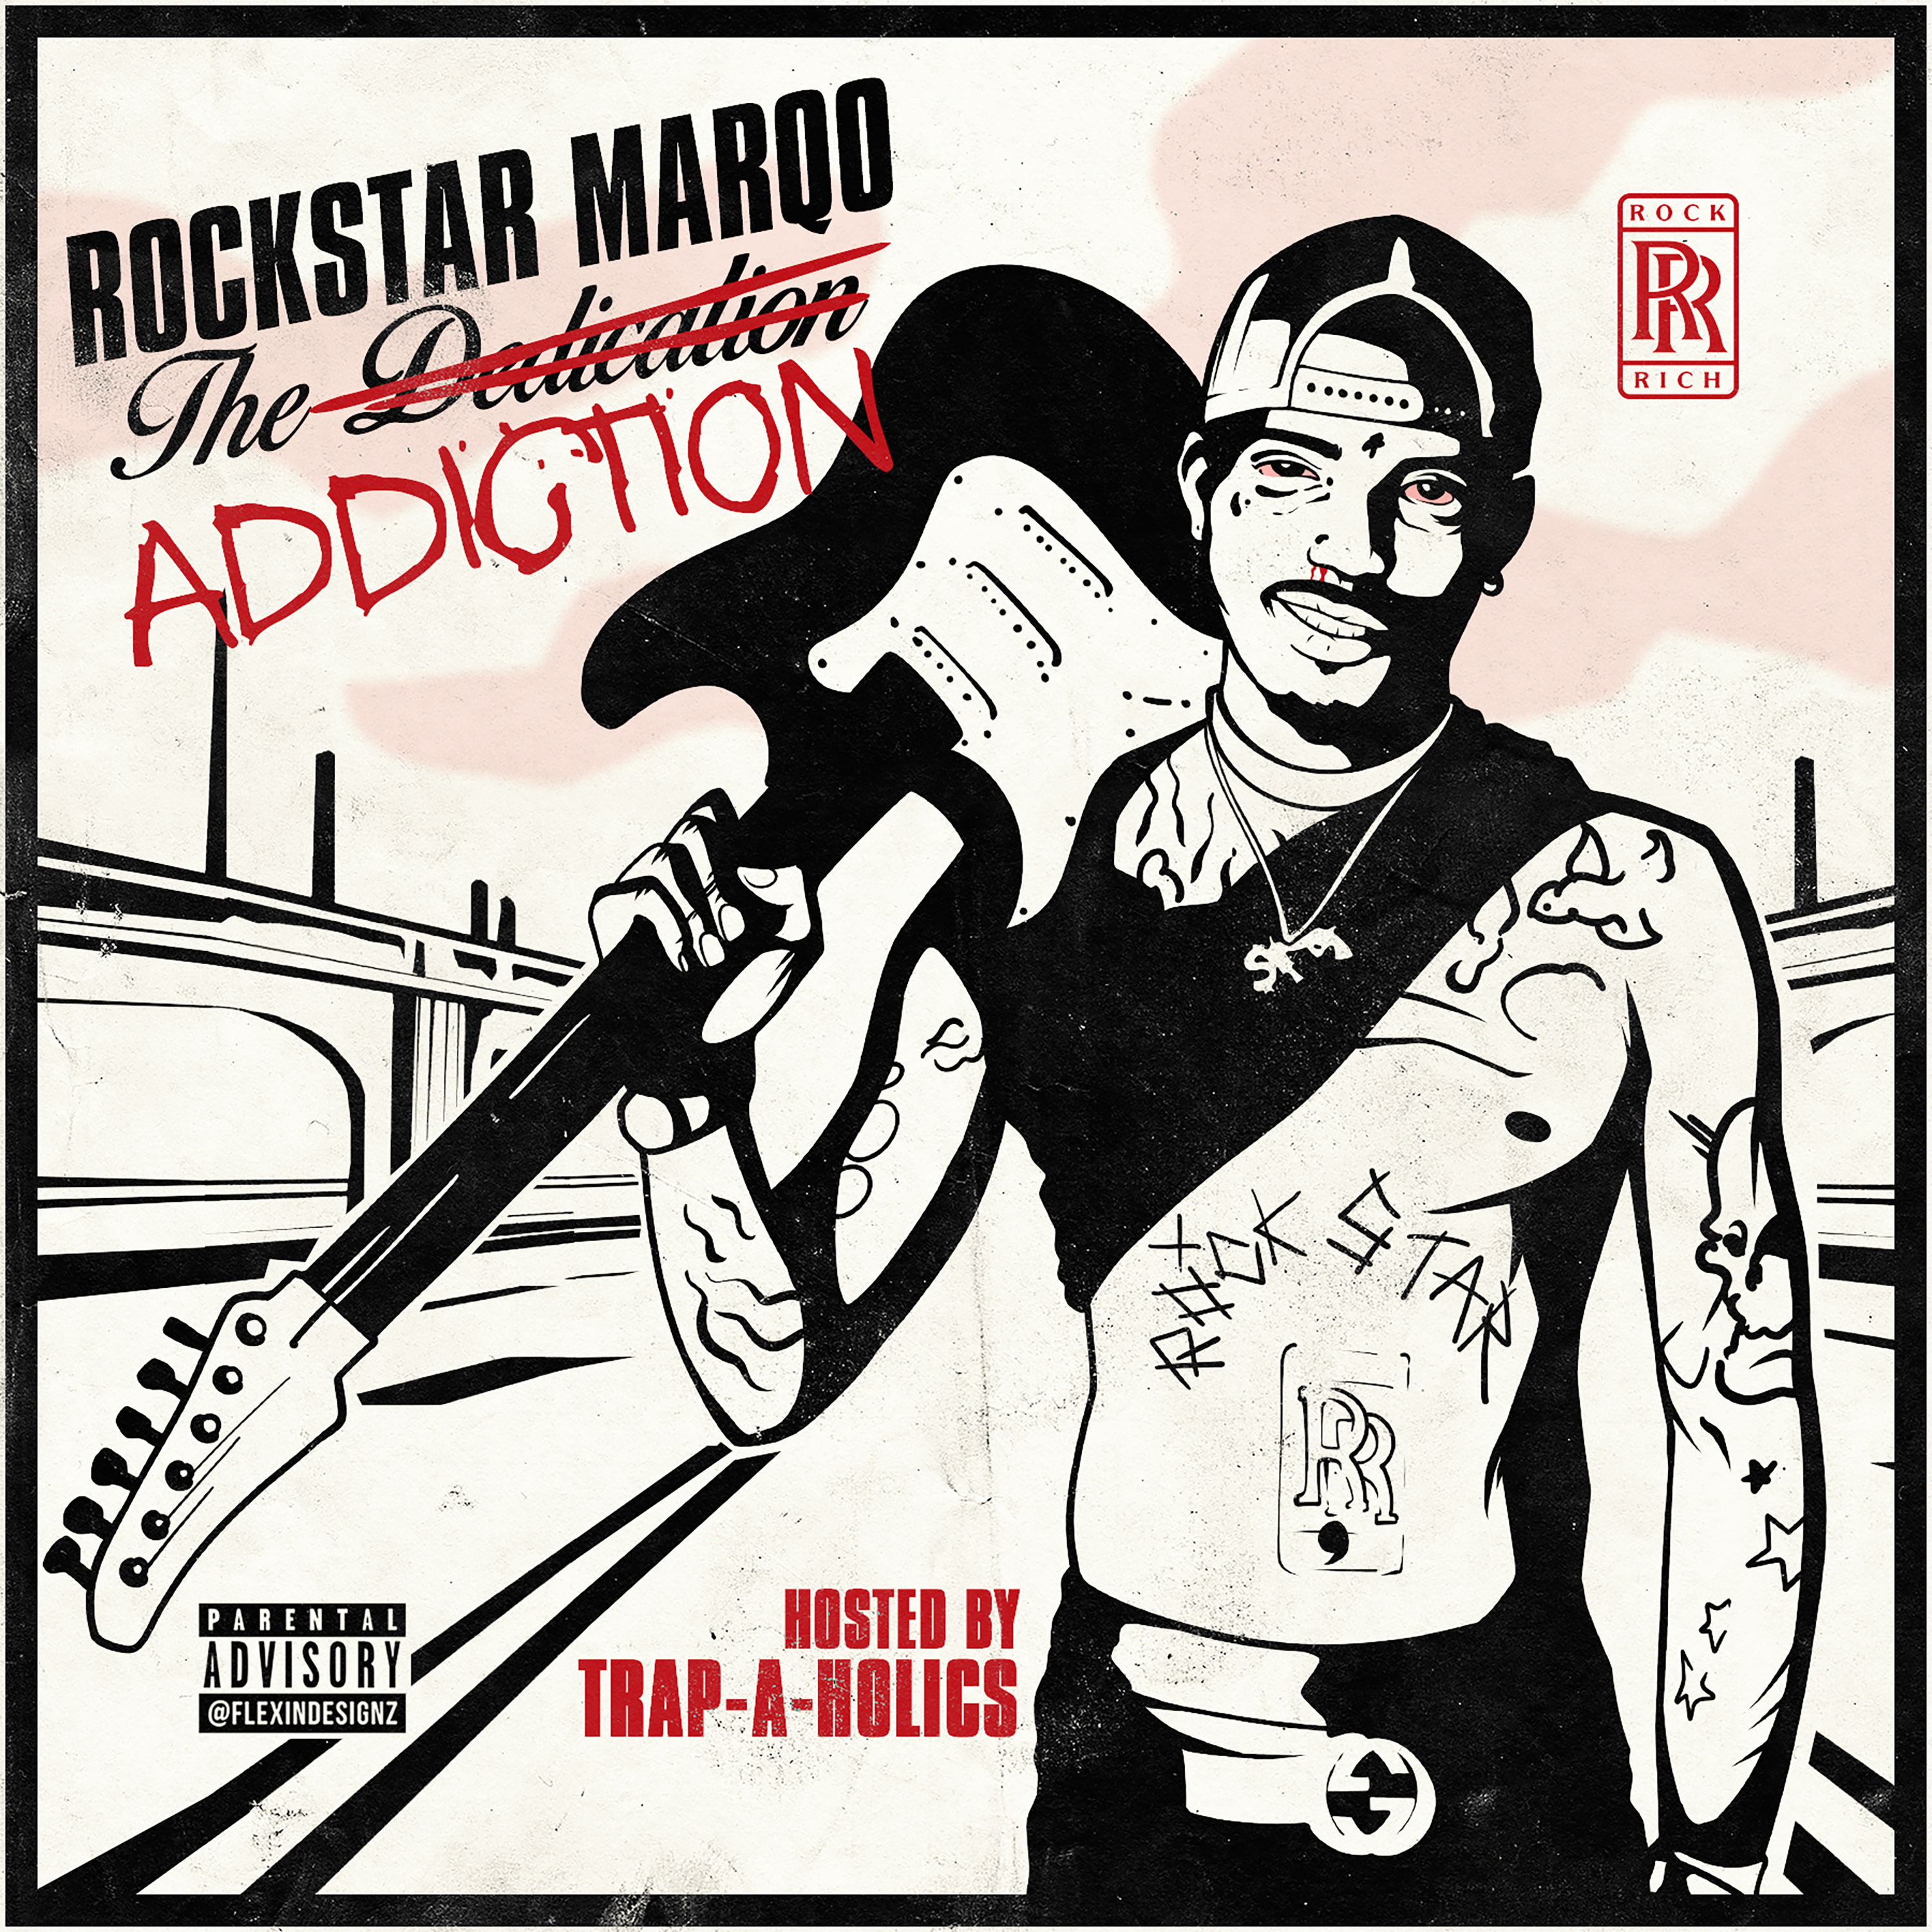 Rockstar Marqo - The Addiction Cover Art